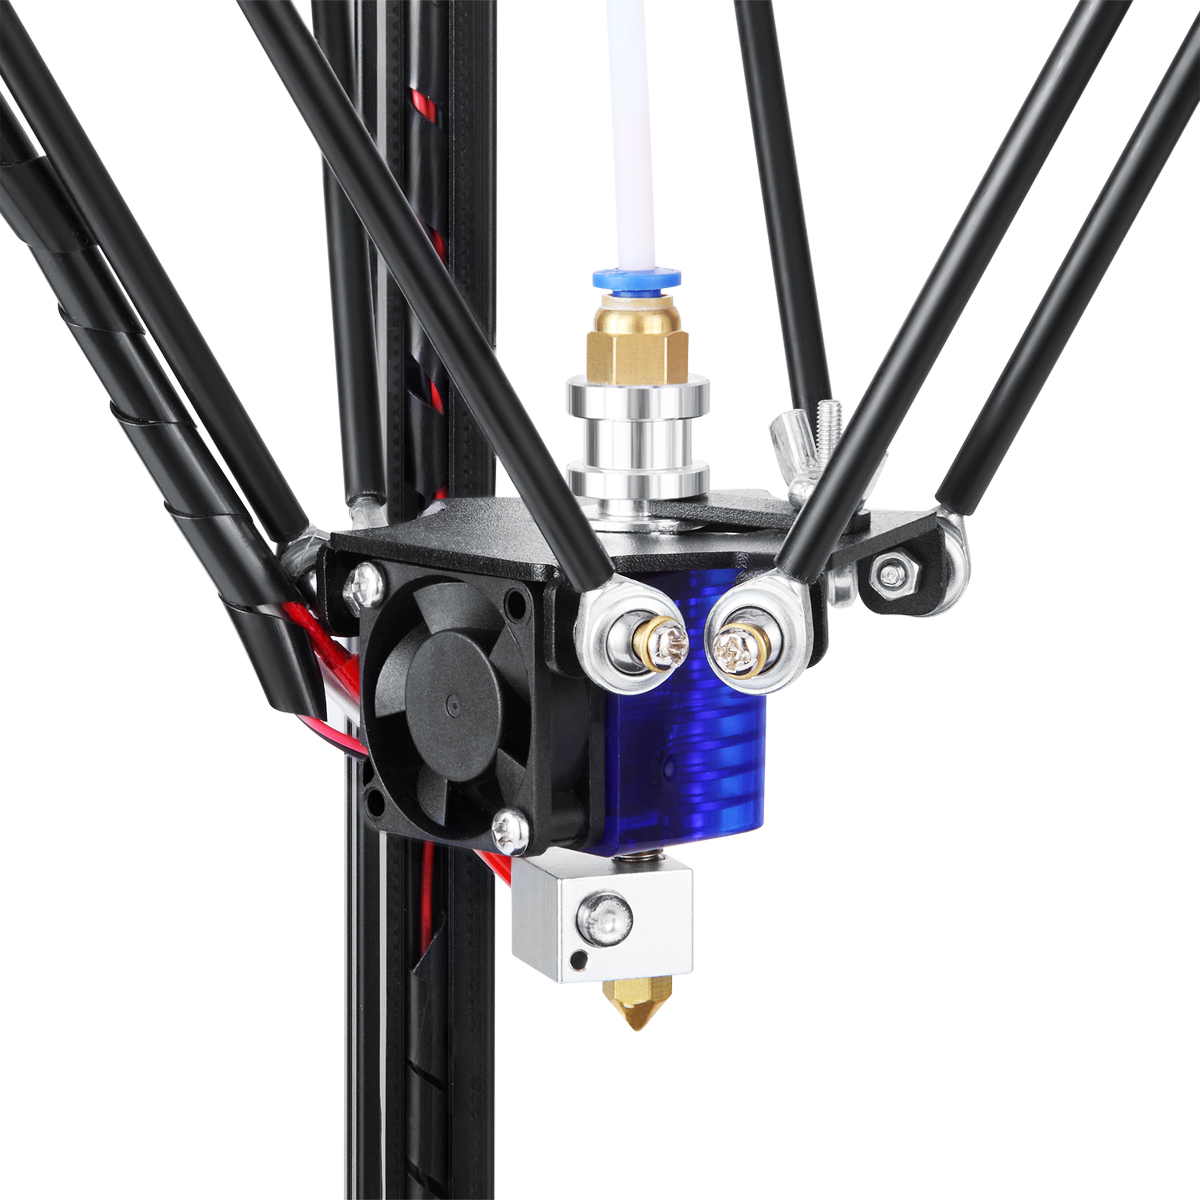 EZT® T1-M+L Delta Kossel 3D Printer DIY Kit 300*320mm Large Printer Size With Laser Engraving/1KG Filament Support Intelligent Leveing/Auto Change Fil 6